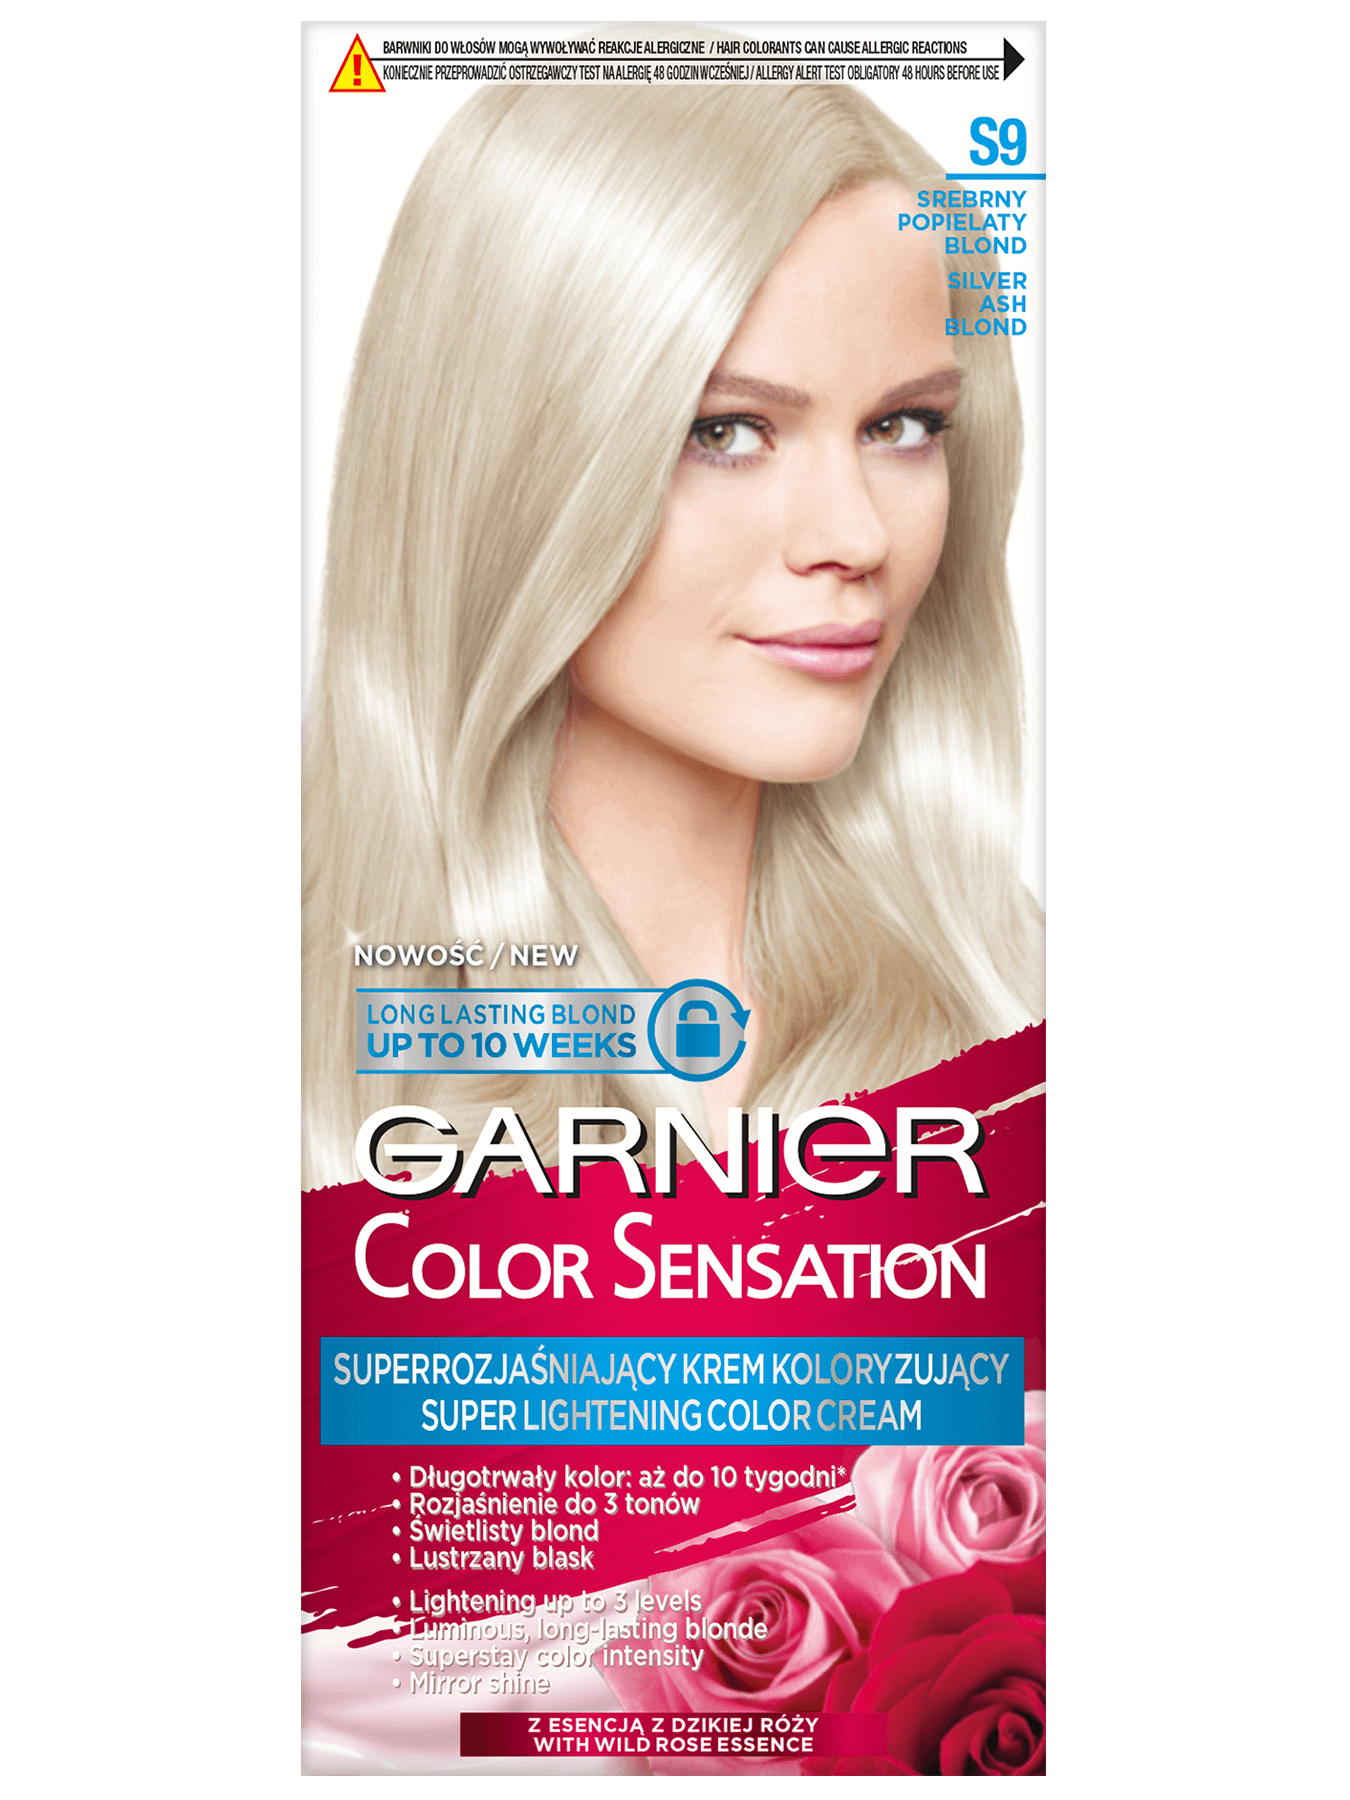 garnier color sensation s 9 srebrny popielaty blond 1350x1800